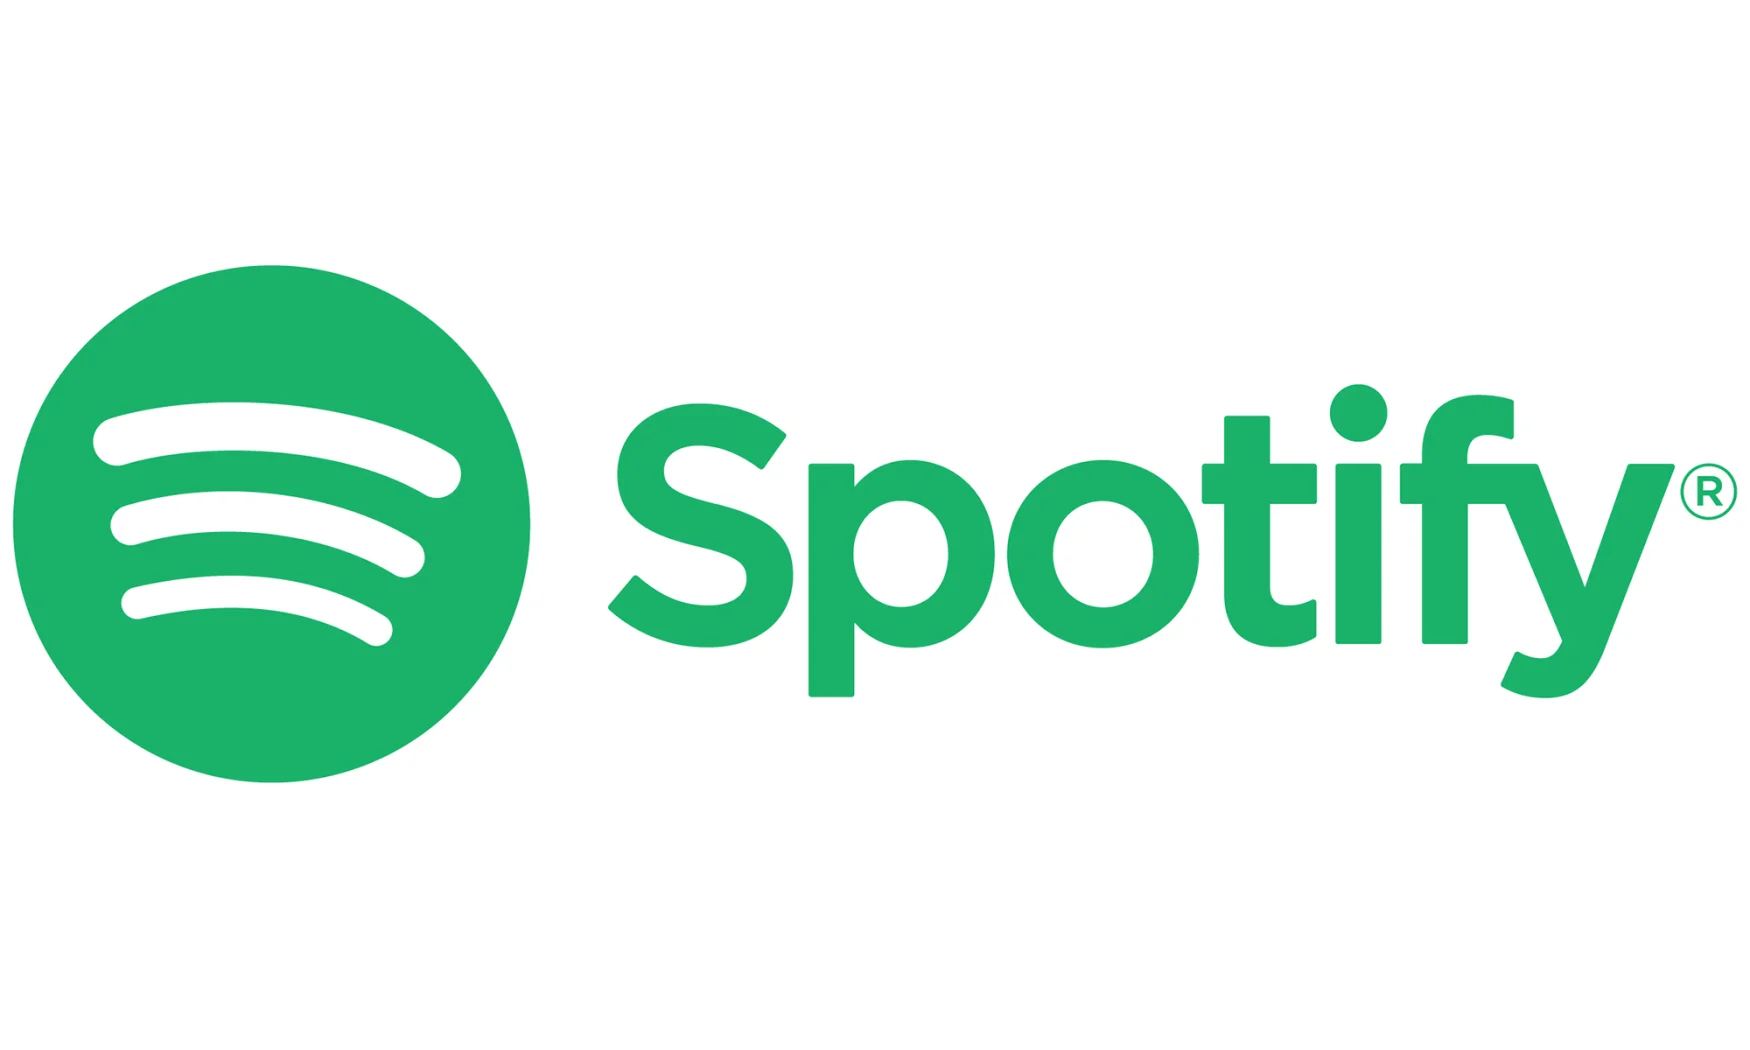 Green Spotify logo on a white background